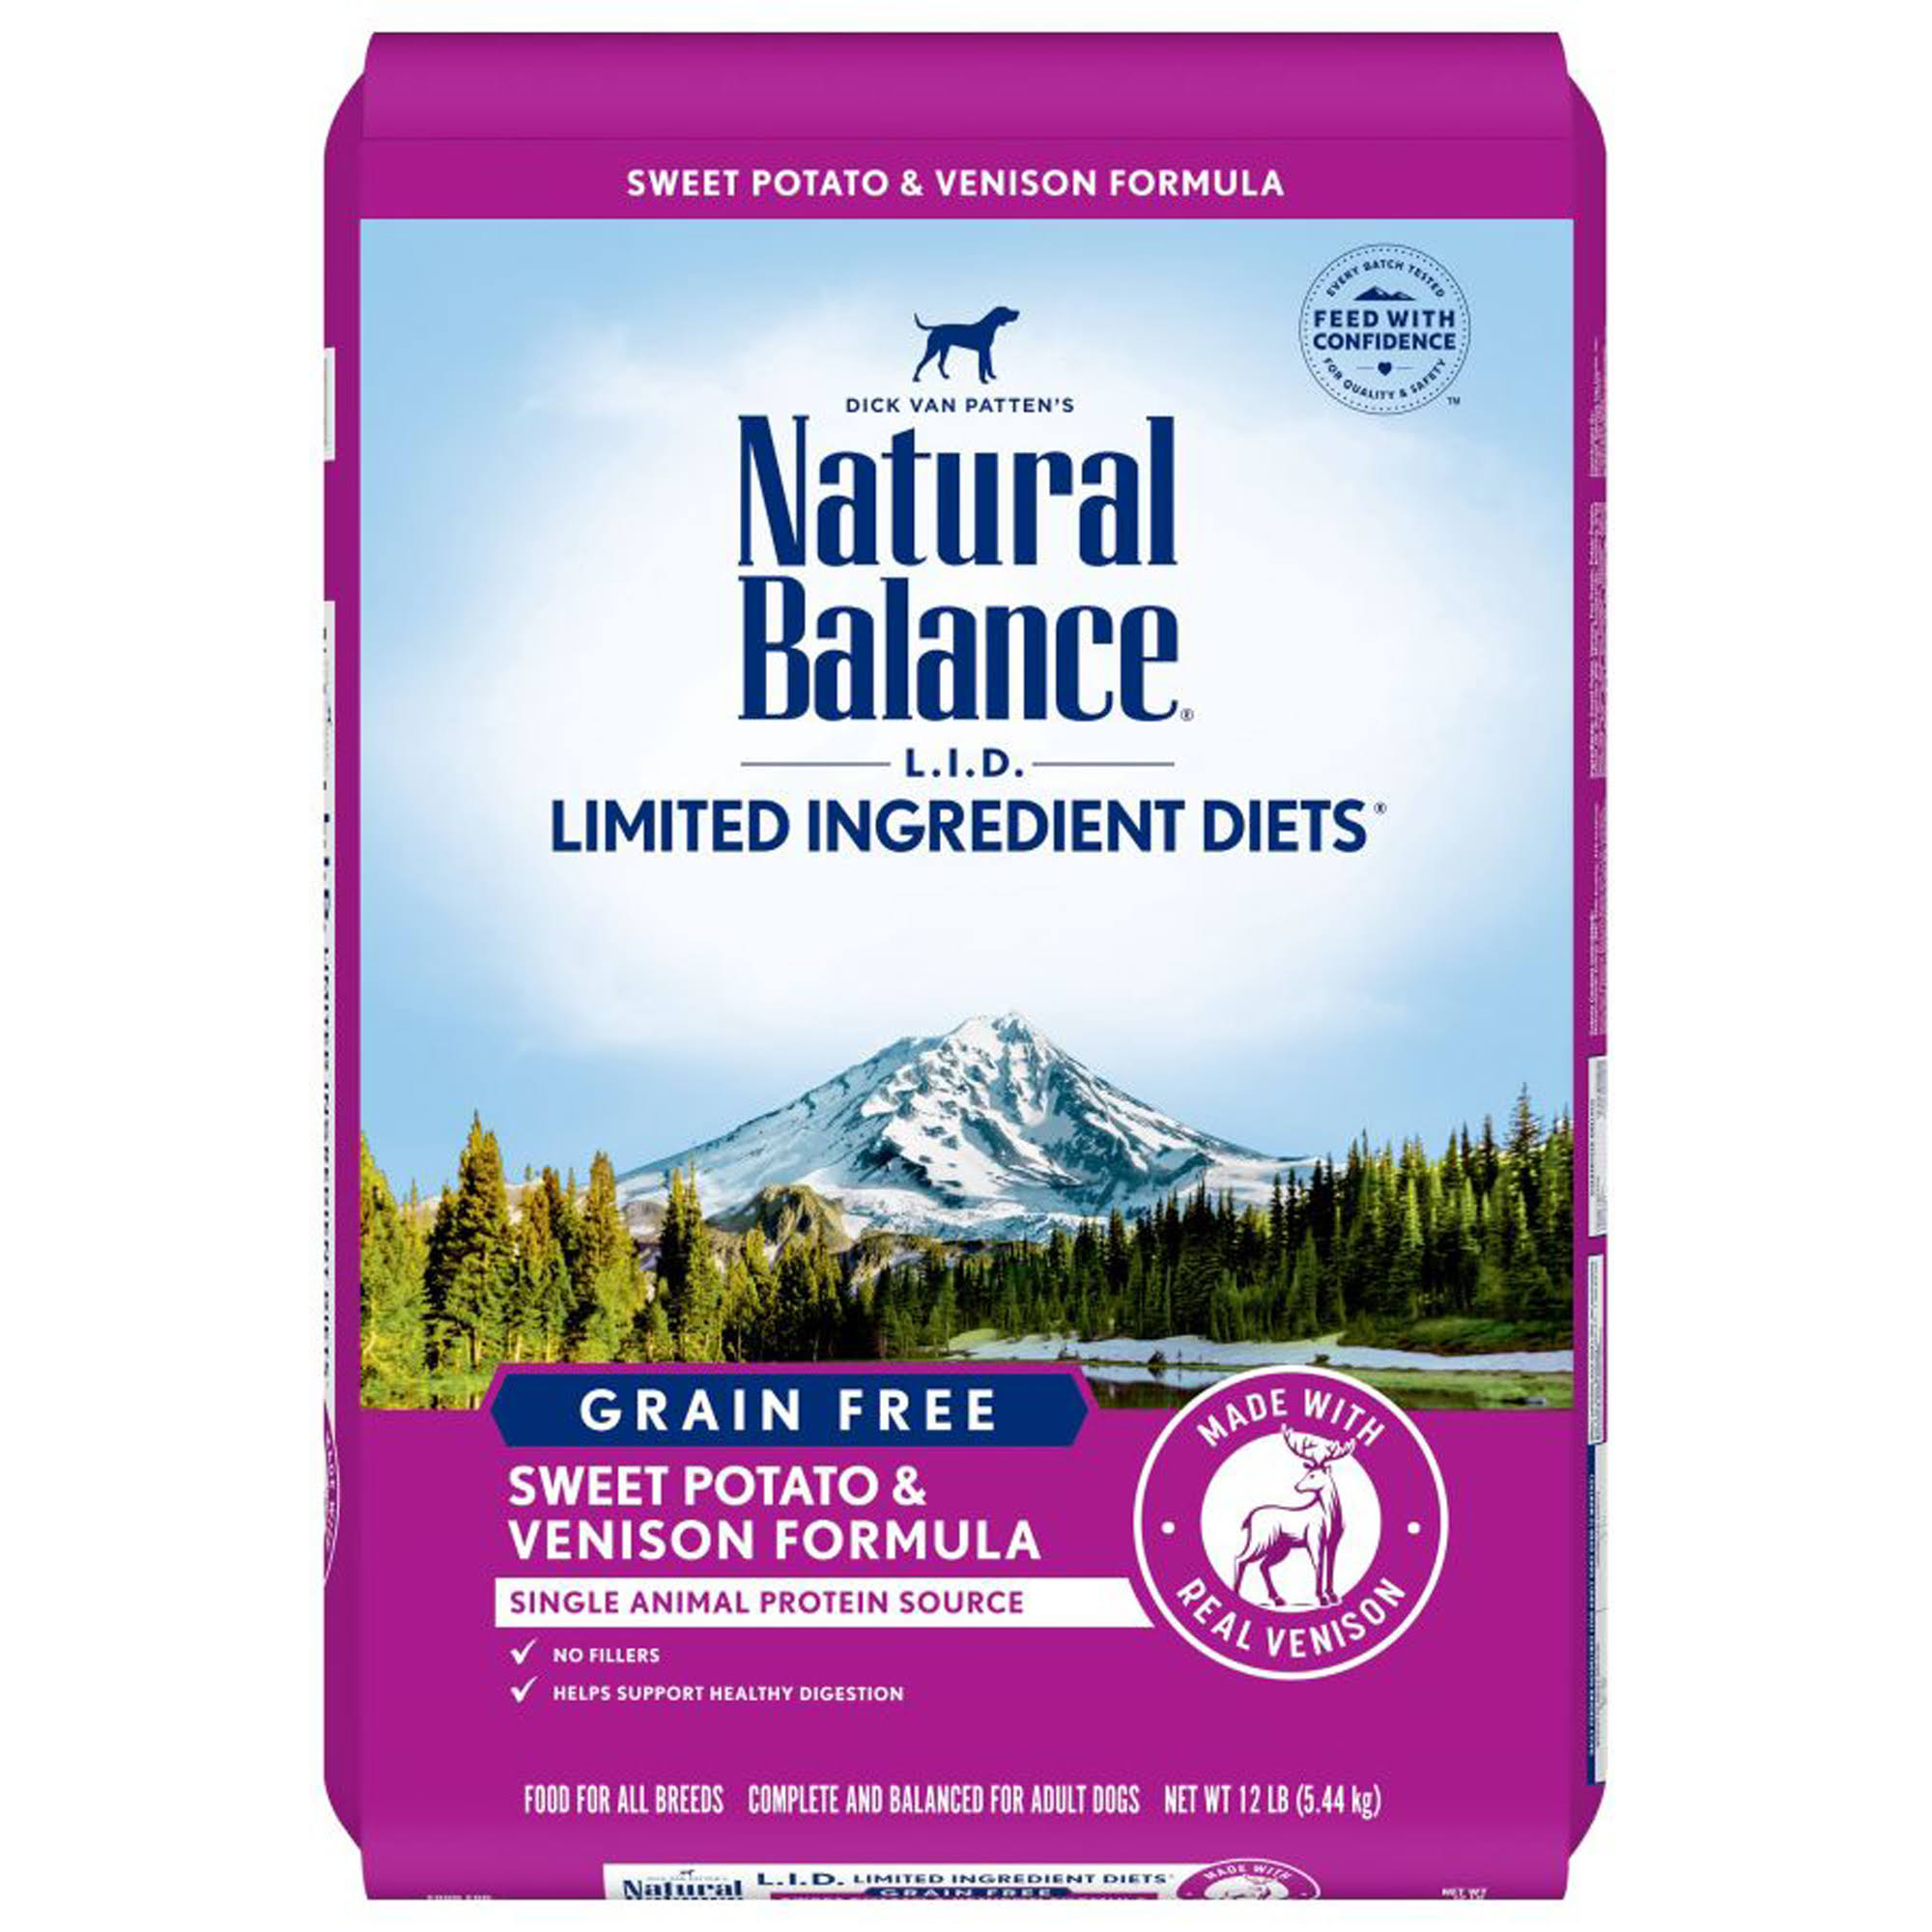 Natural Balance Limited Ingredient Diets Grain Free Sweet Potato & Venison Formula, Dry Dog Food 12-lb